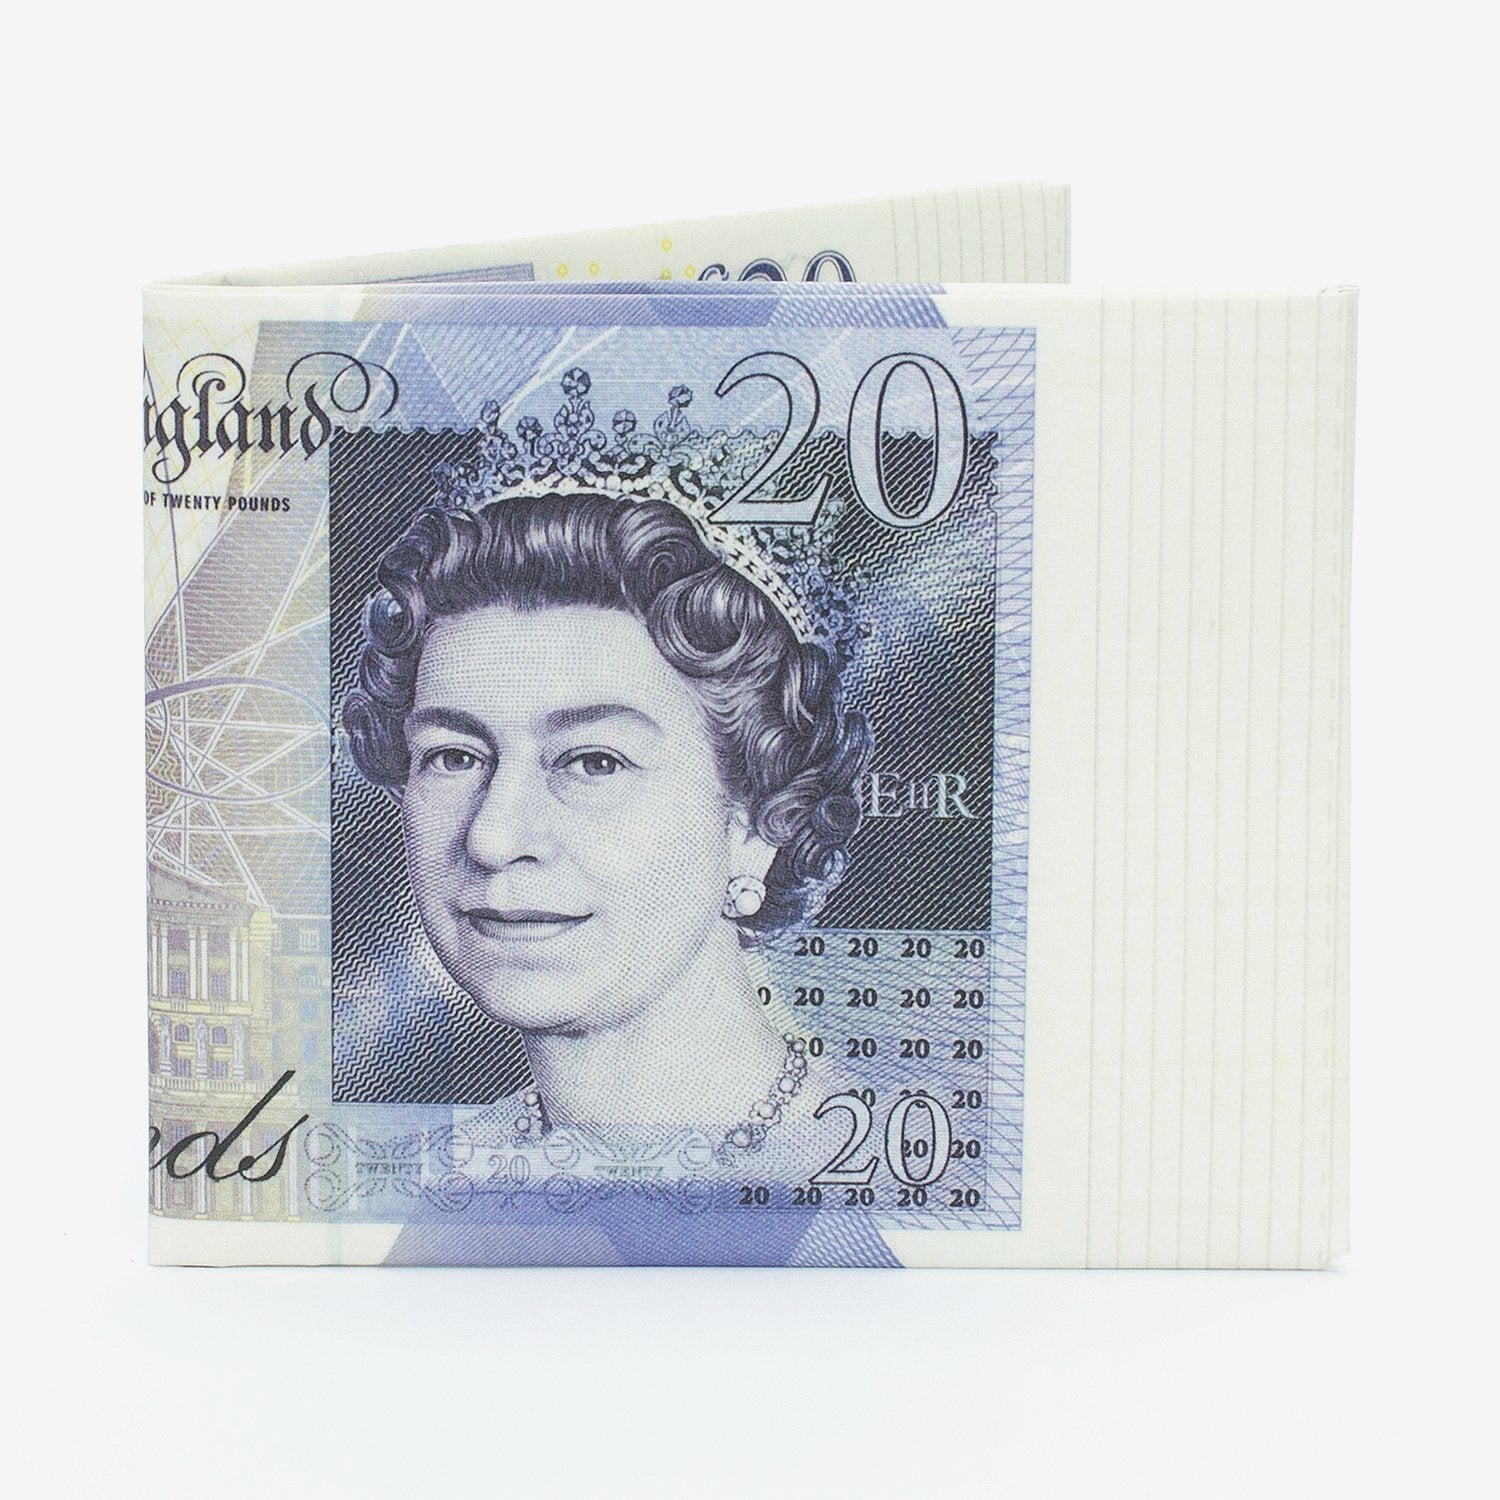 GBP Bifold - The Walart - Paper Wallet